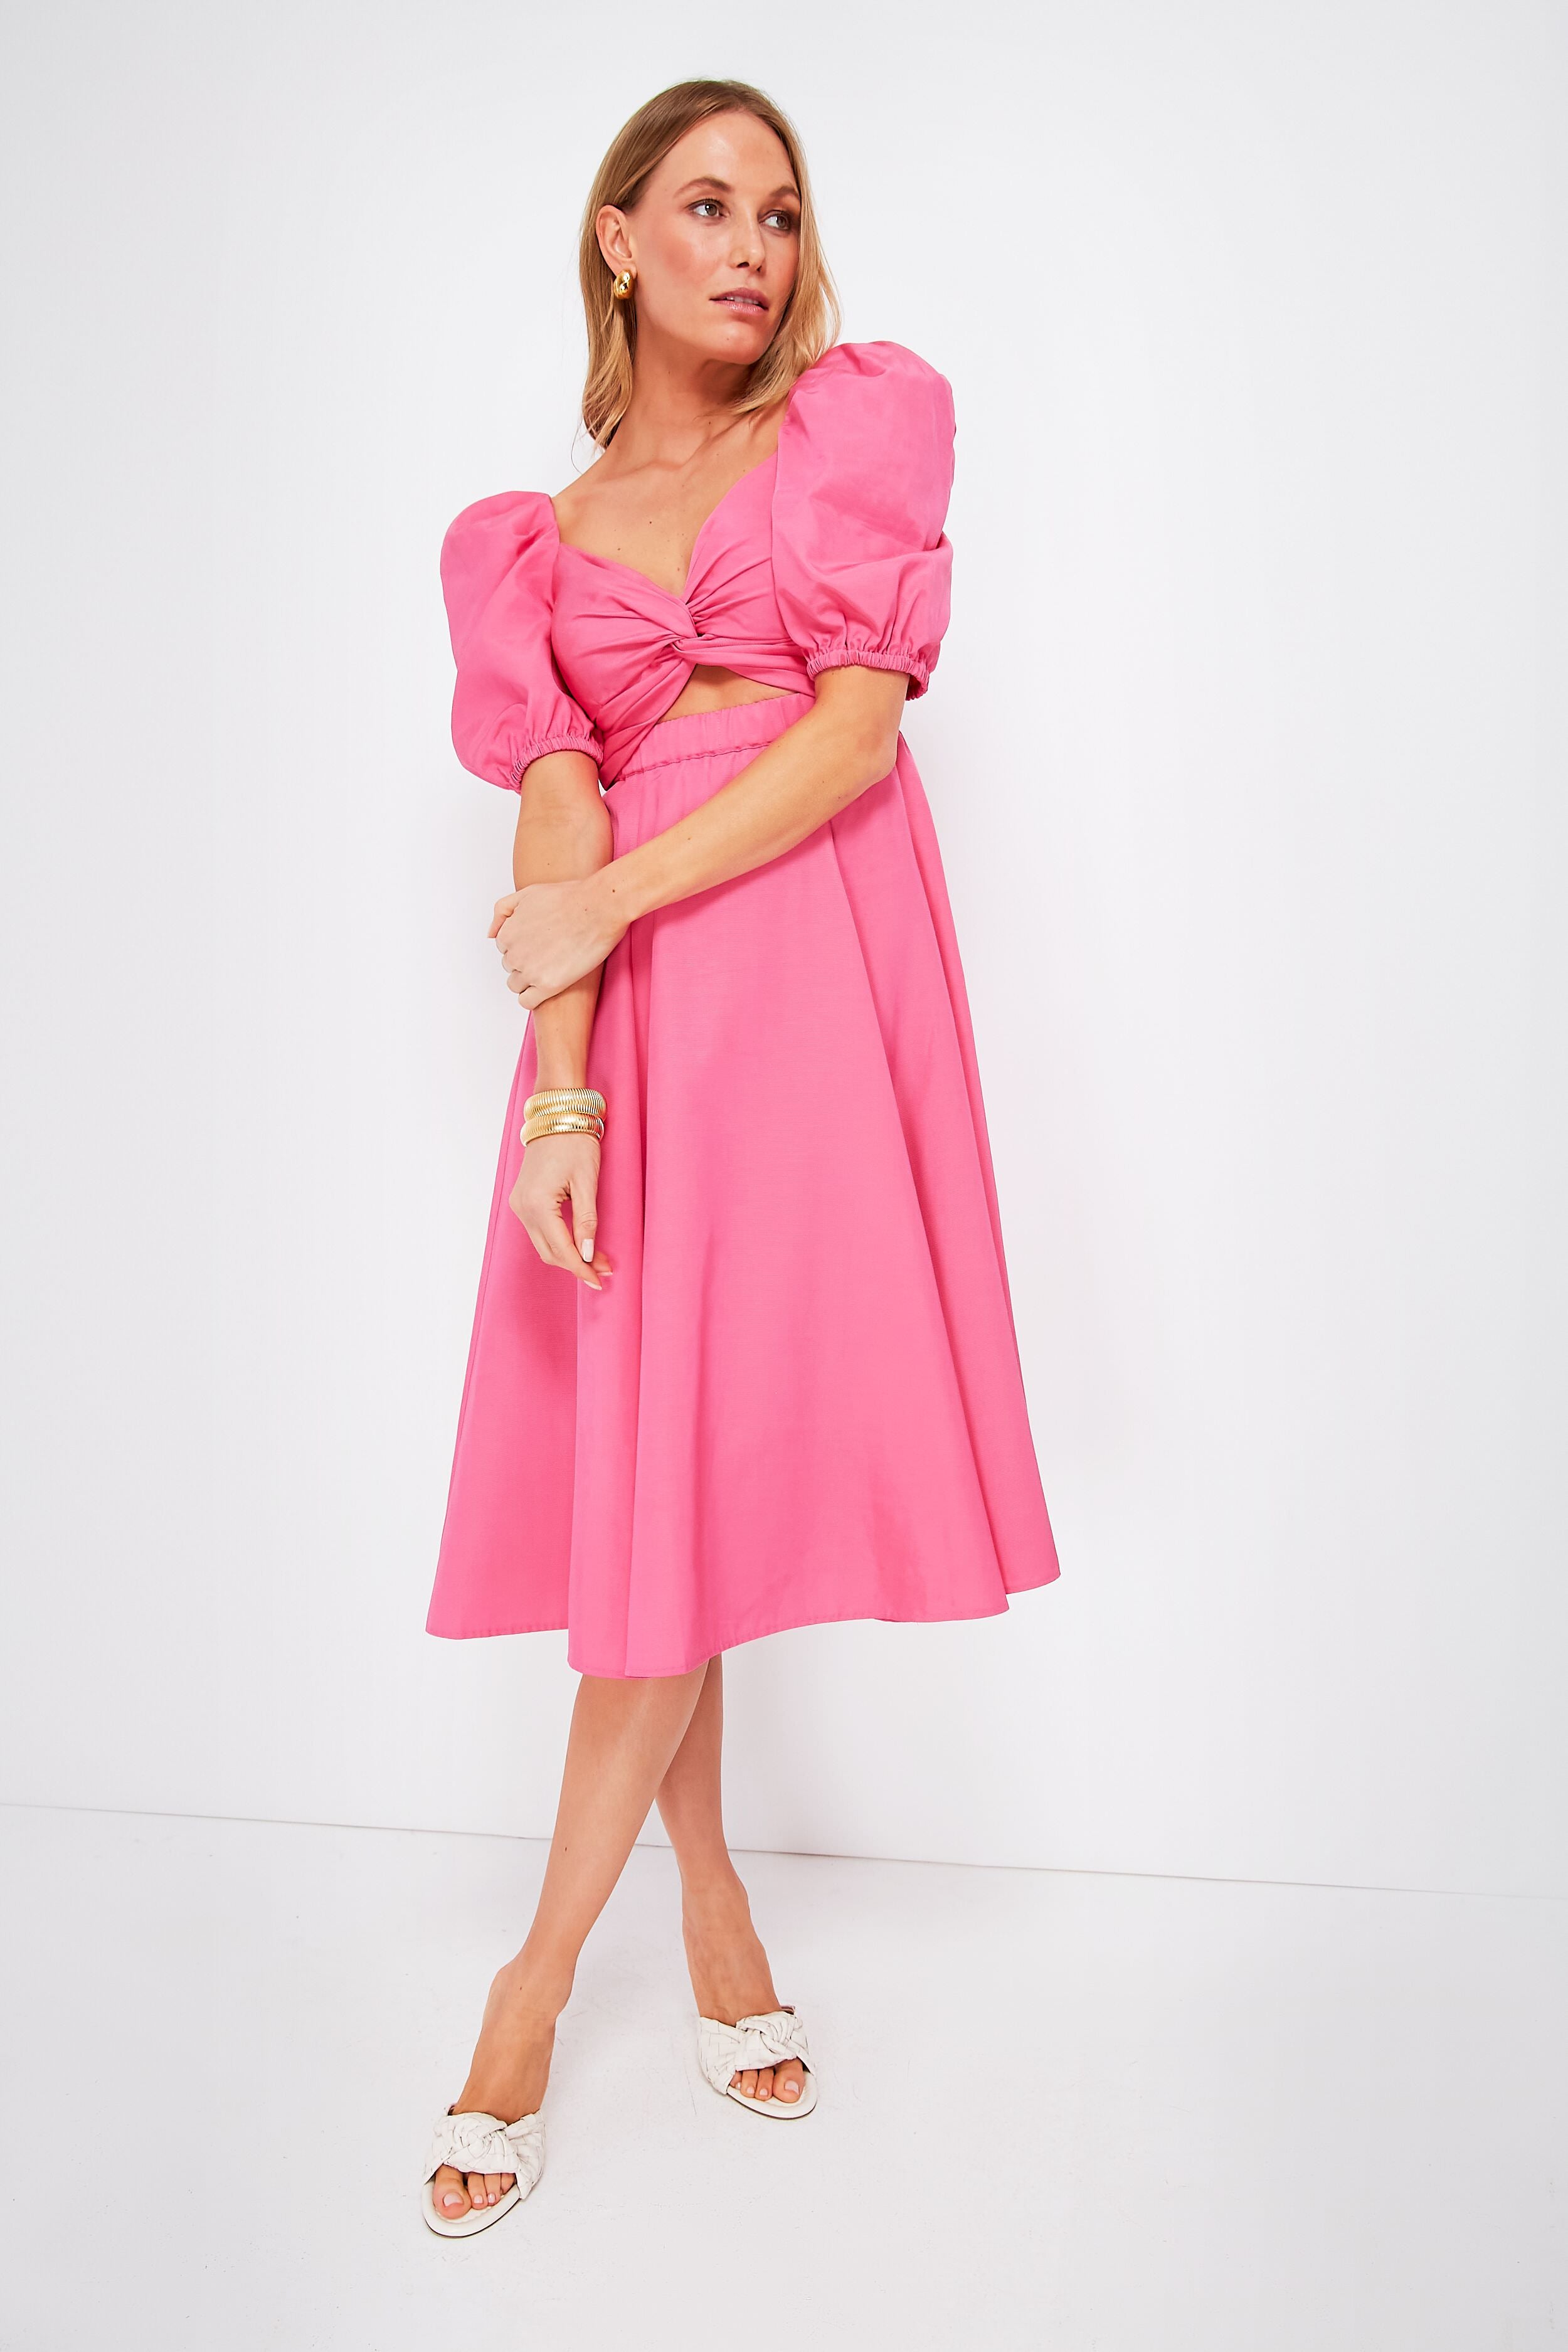 Kate Spade New York Women's Midi Dress - Pink - 8